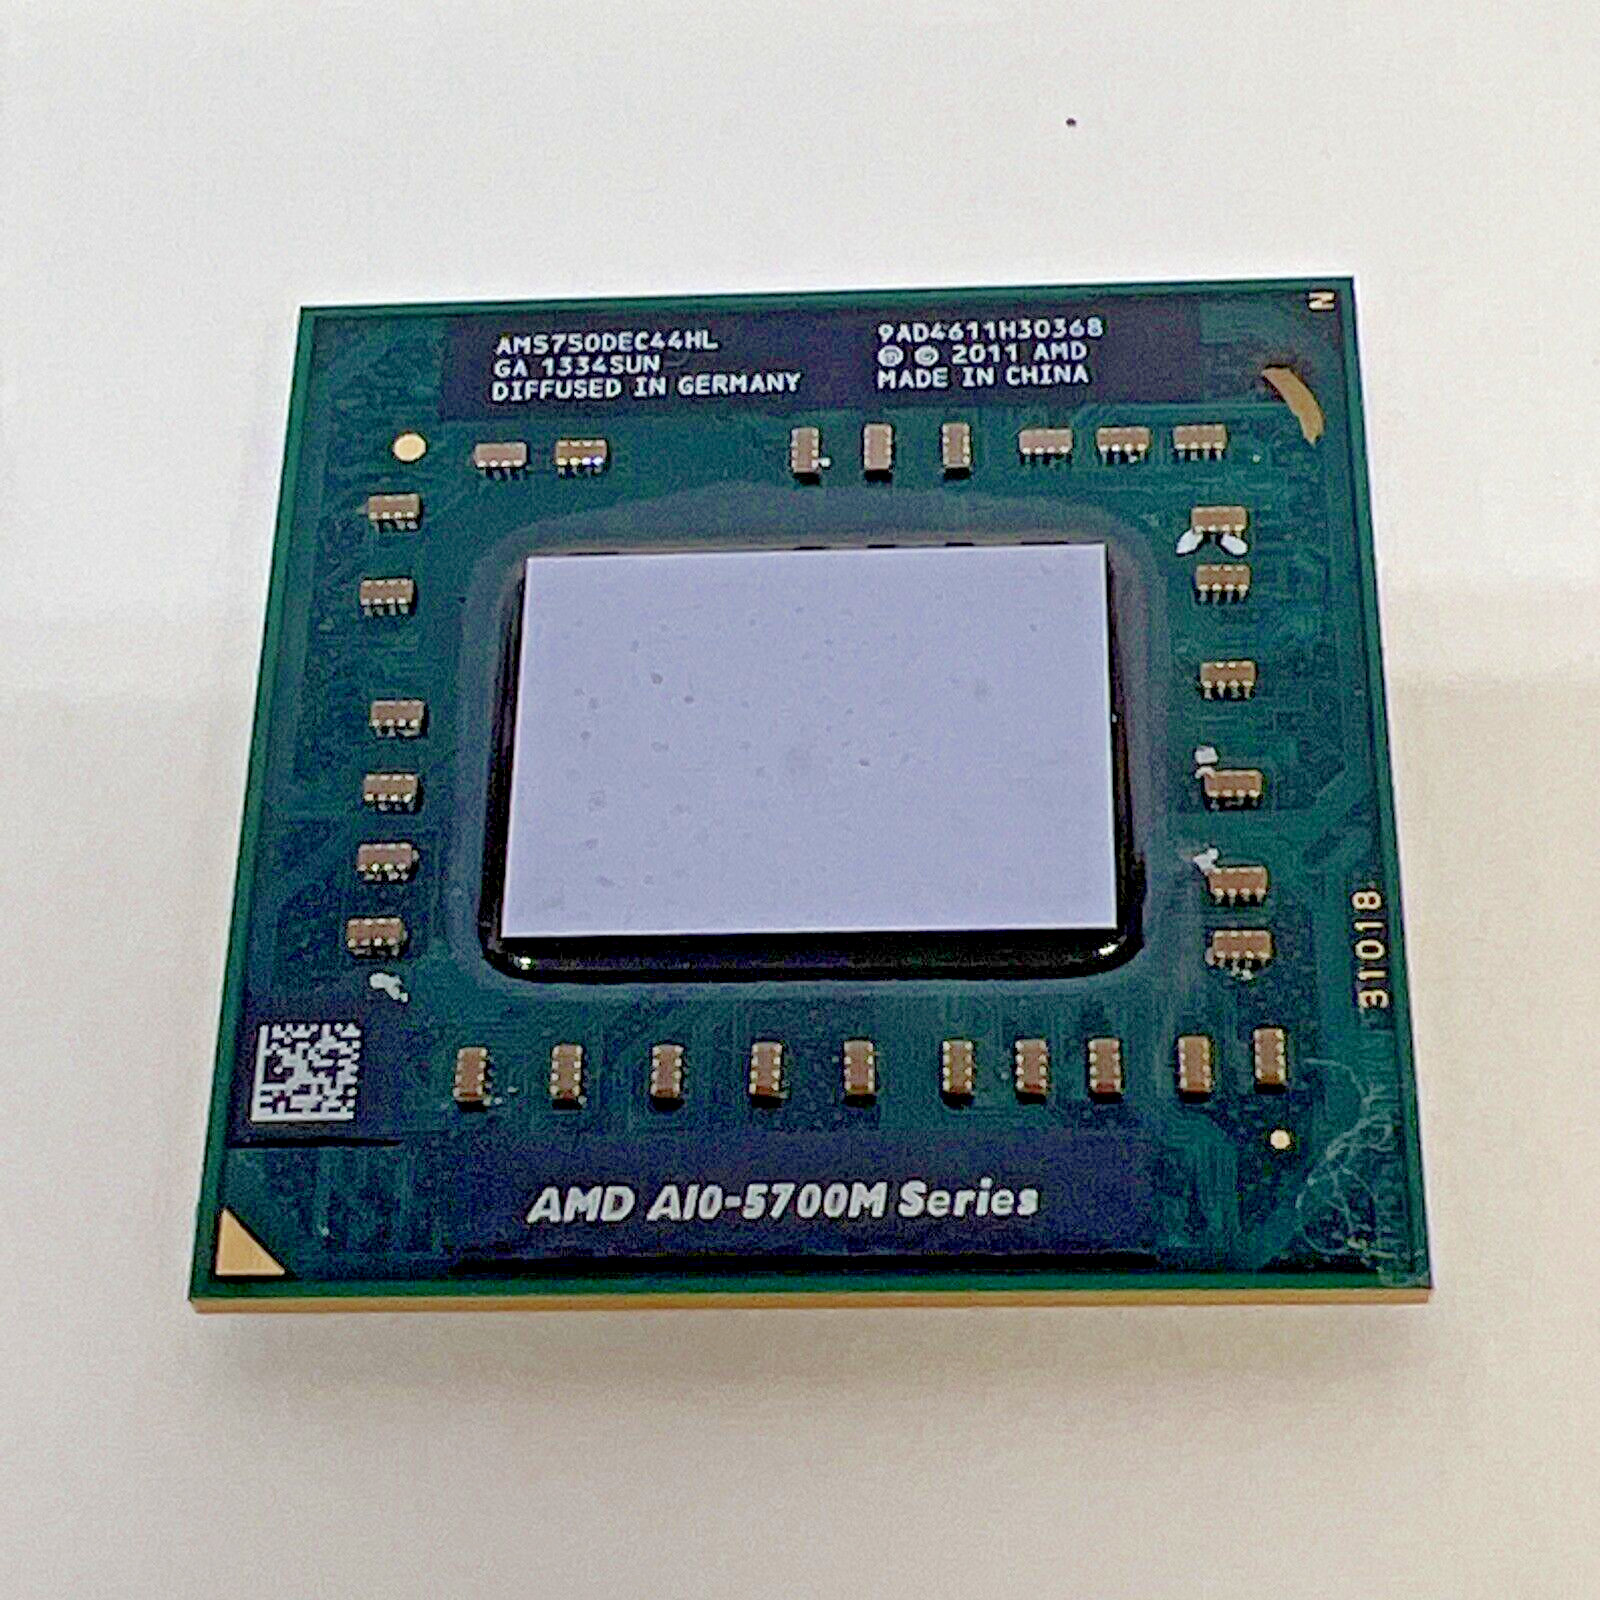 AMD Quad-Core laptop CPU A10 5750M 2.5Ghz Processor Socket FS1 AM5750DEC44HL